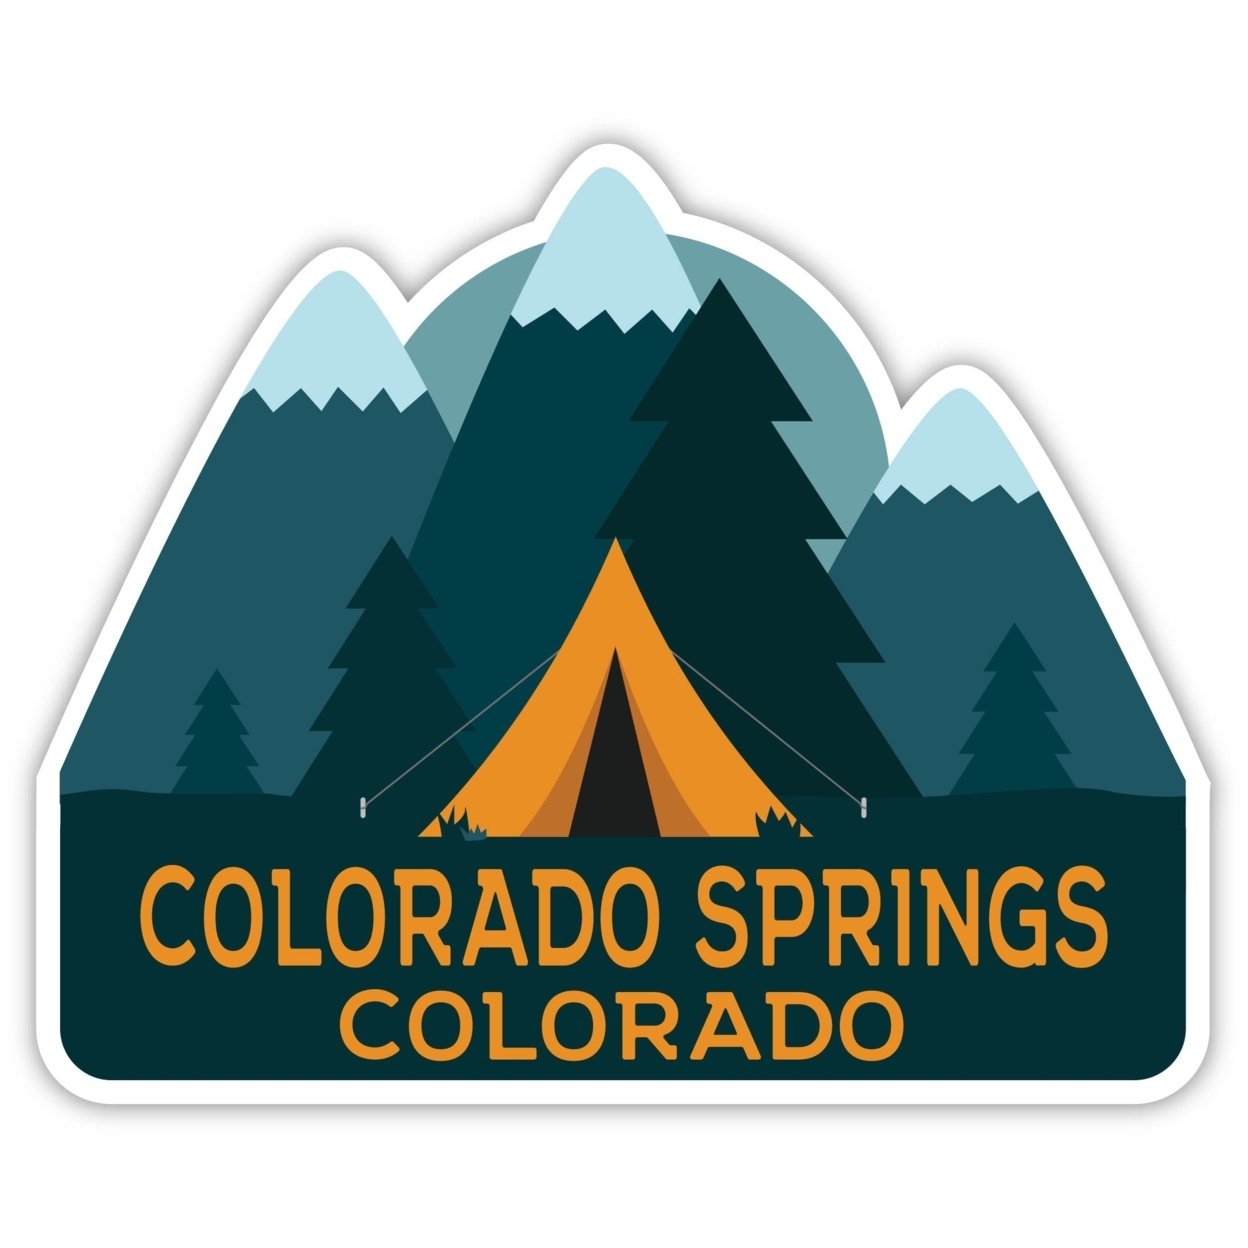 Colorado Springs Colorado Souvenir Decorative Stickers (Choose Theme And Size) - 4-Pack, 4-Inch, Bear